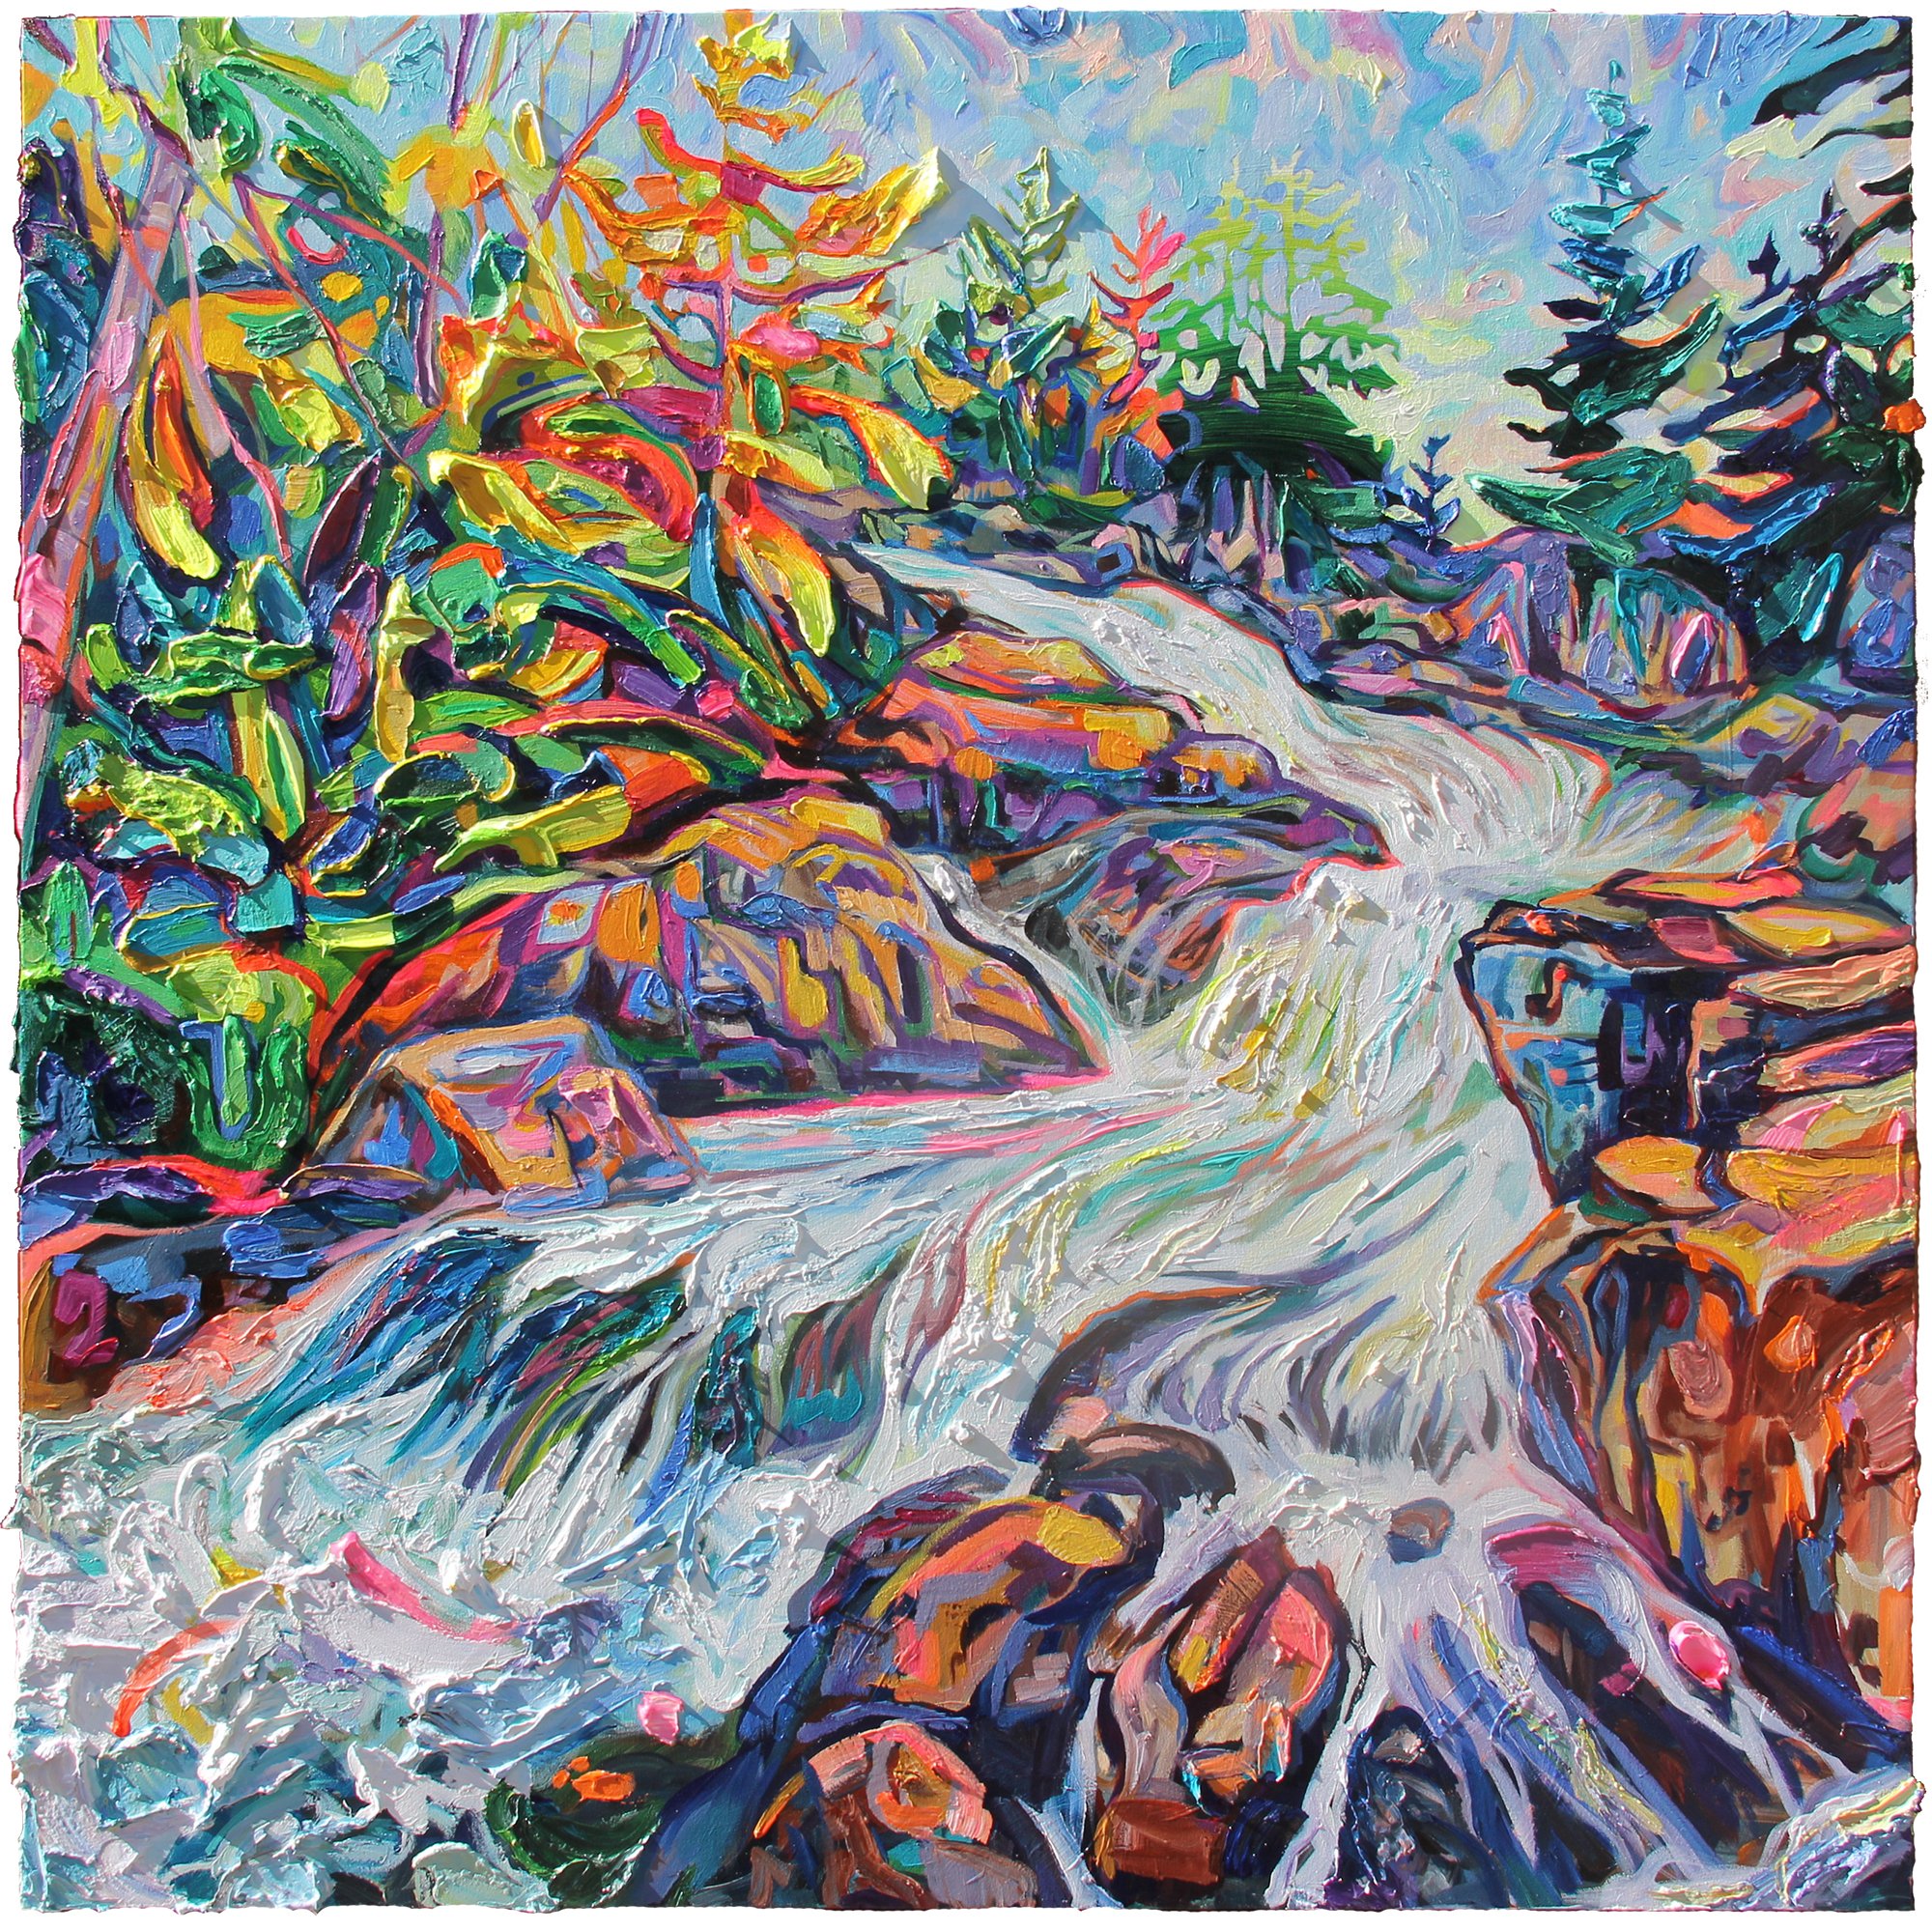 Ragged Falls, 48 x 48", acrylic on panel, 2021